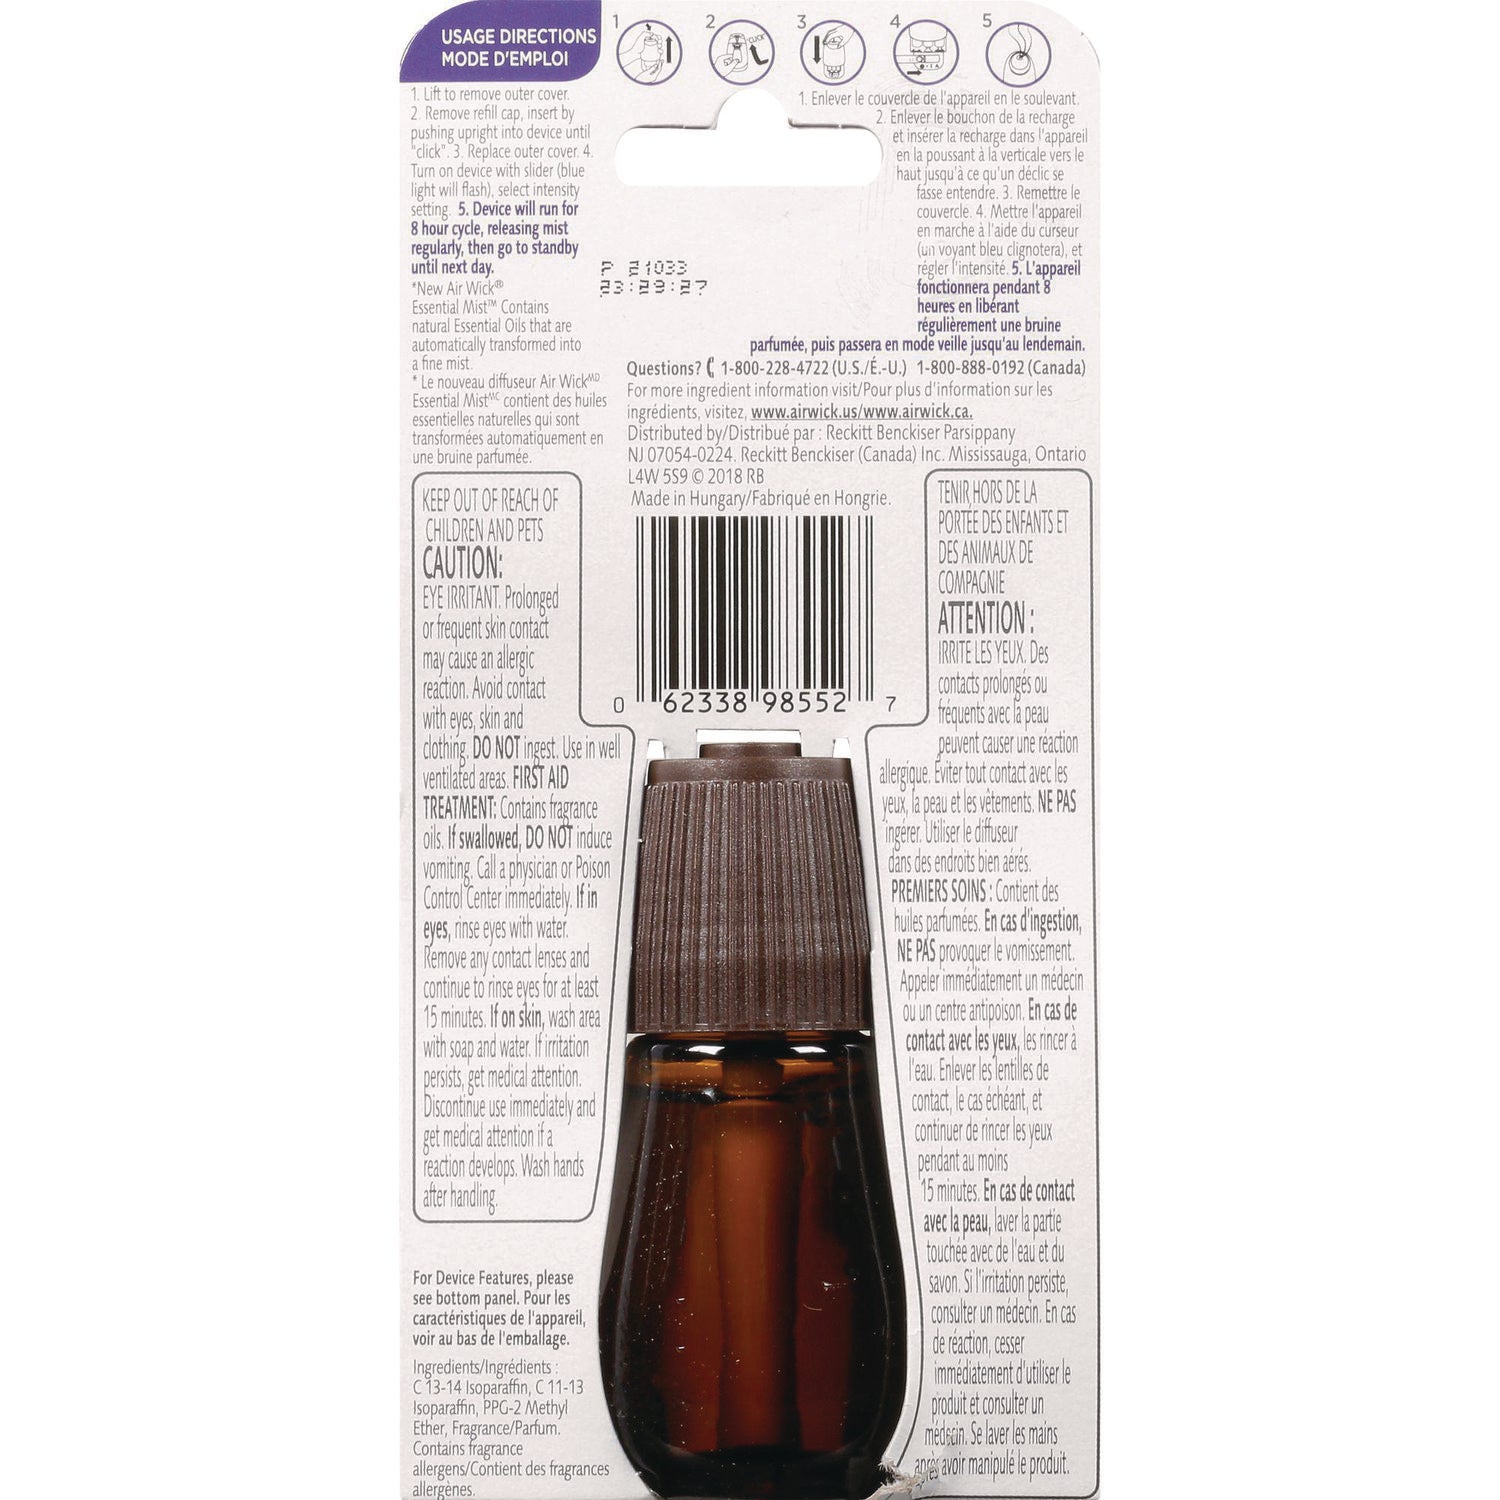 essential-mist-refill-lavender-and-almond-blossom-067-oz-bottle_rac98552ea - 8